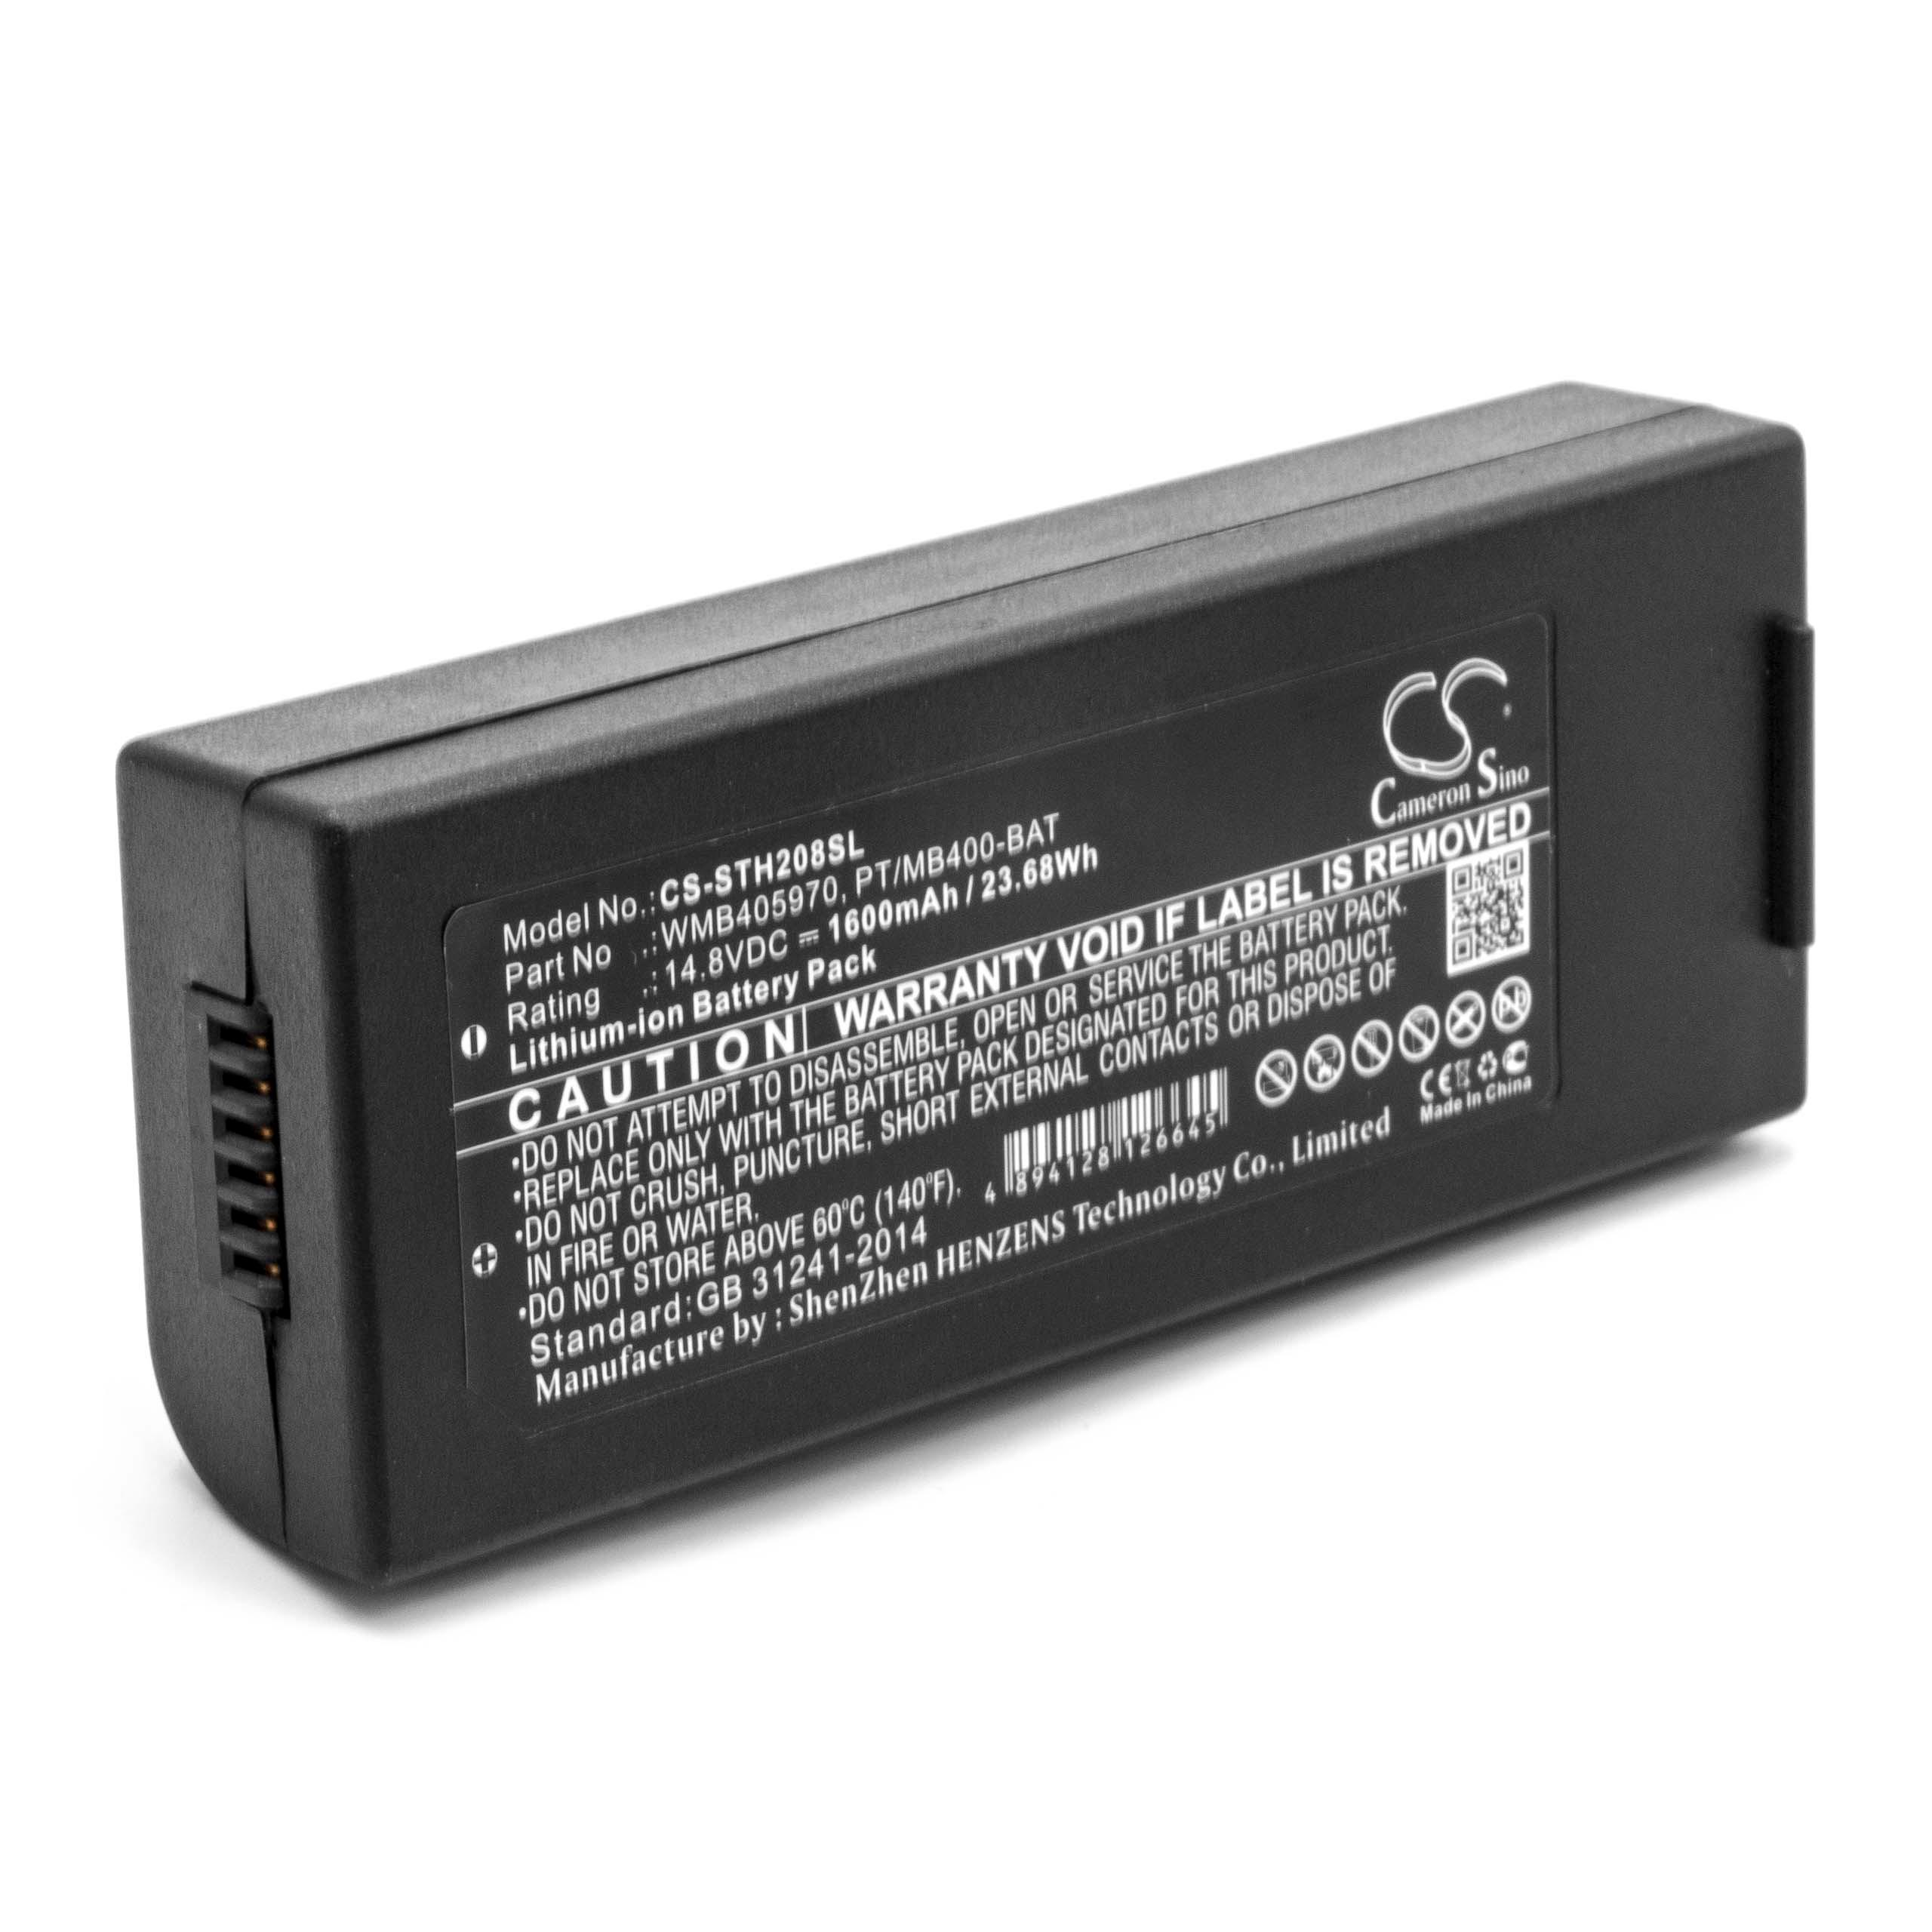 Printer Battery Replacement for WMB405970, PT/MB400-BAT - 1600mAh 14.8V Li-Ion